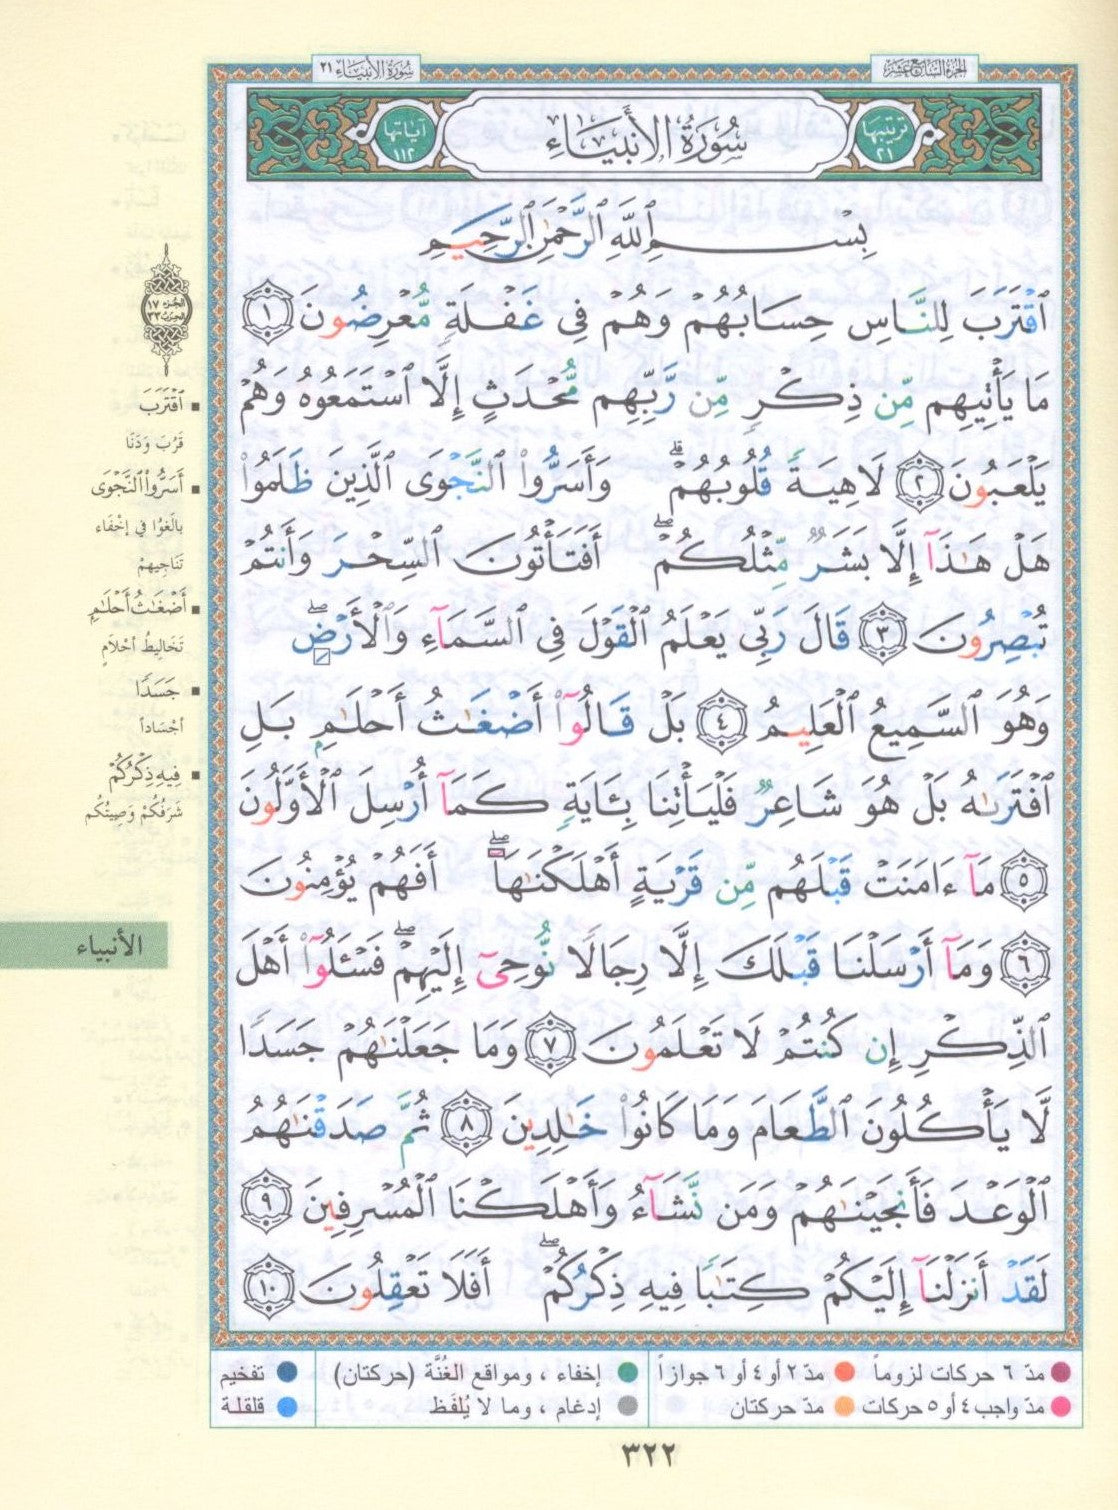 Color Coded Tajweed Qur'an With Zipper 4" x 5.5" Medium Size (Arabic Edition)